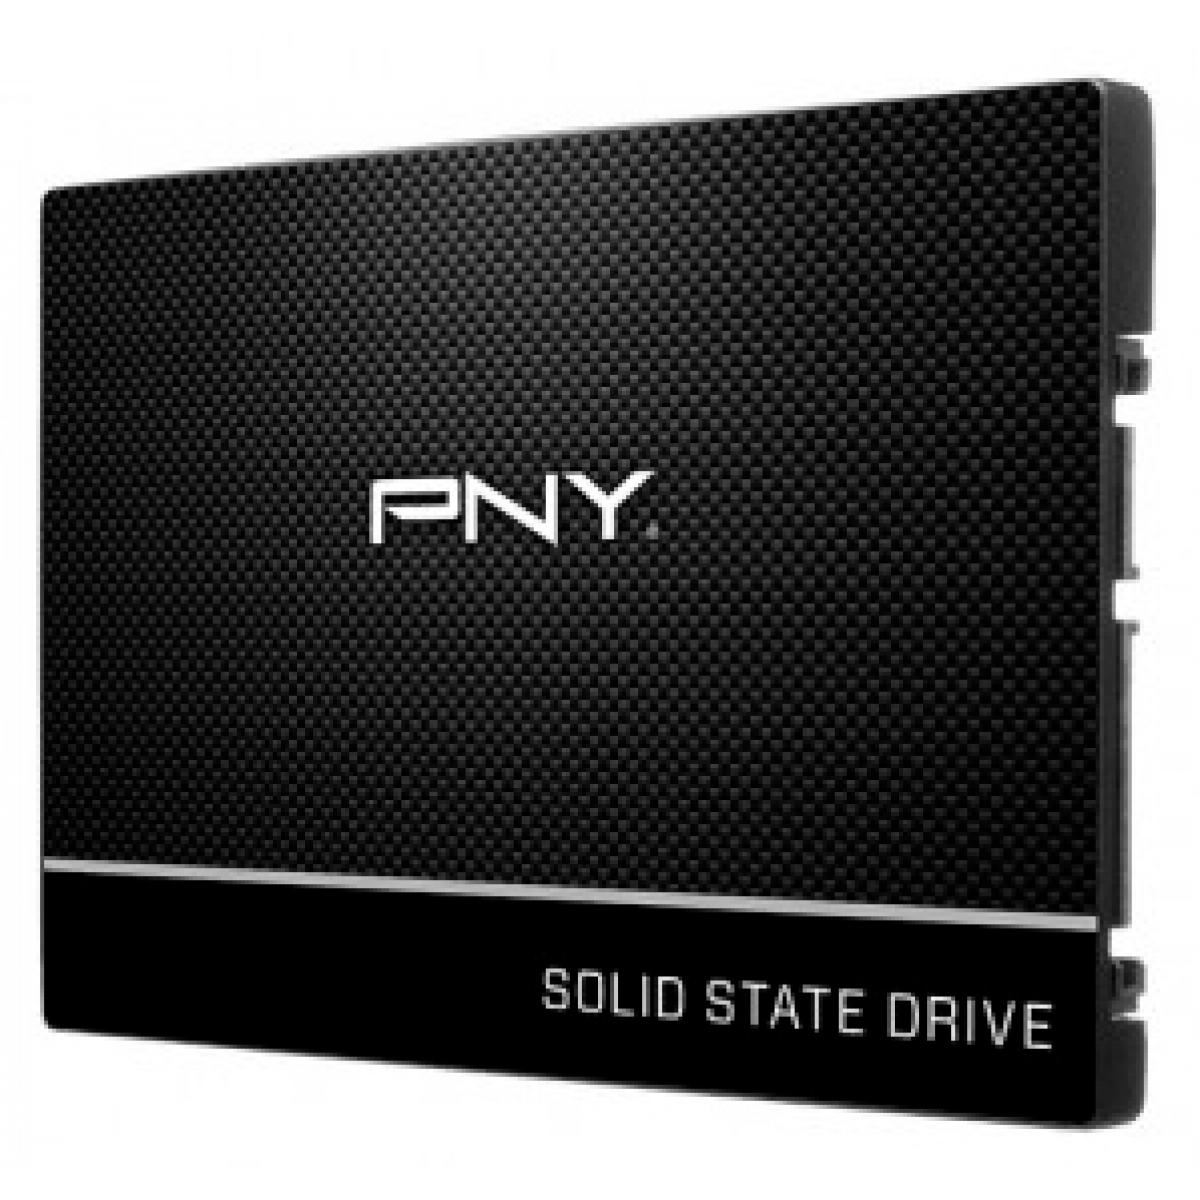 SSD PNY CS900, 240GB, Sata III, Leitura 535MBs e Gravação 500MBs, SSD7CS900-240-RB